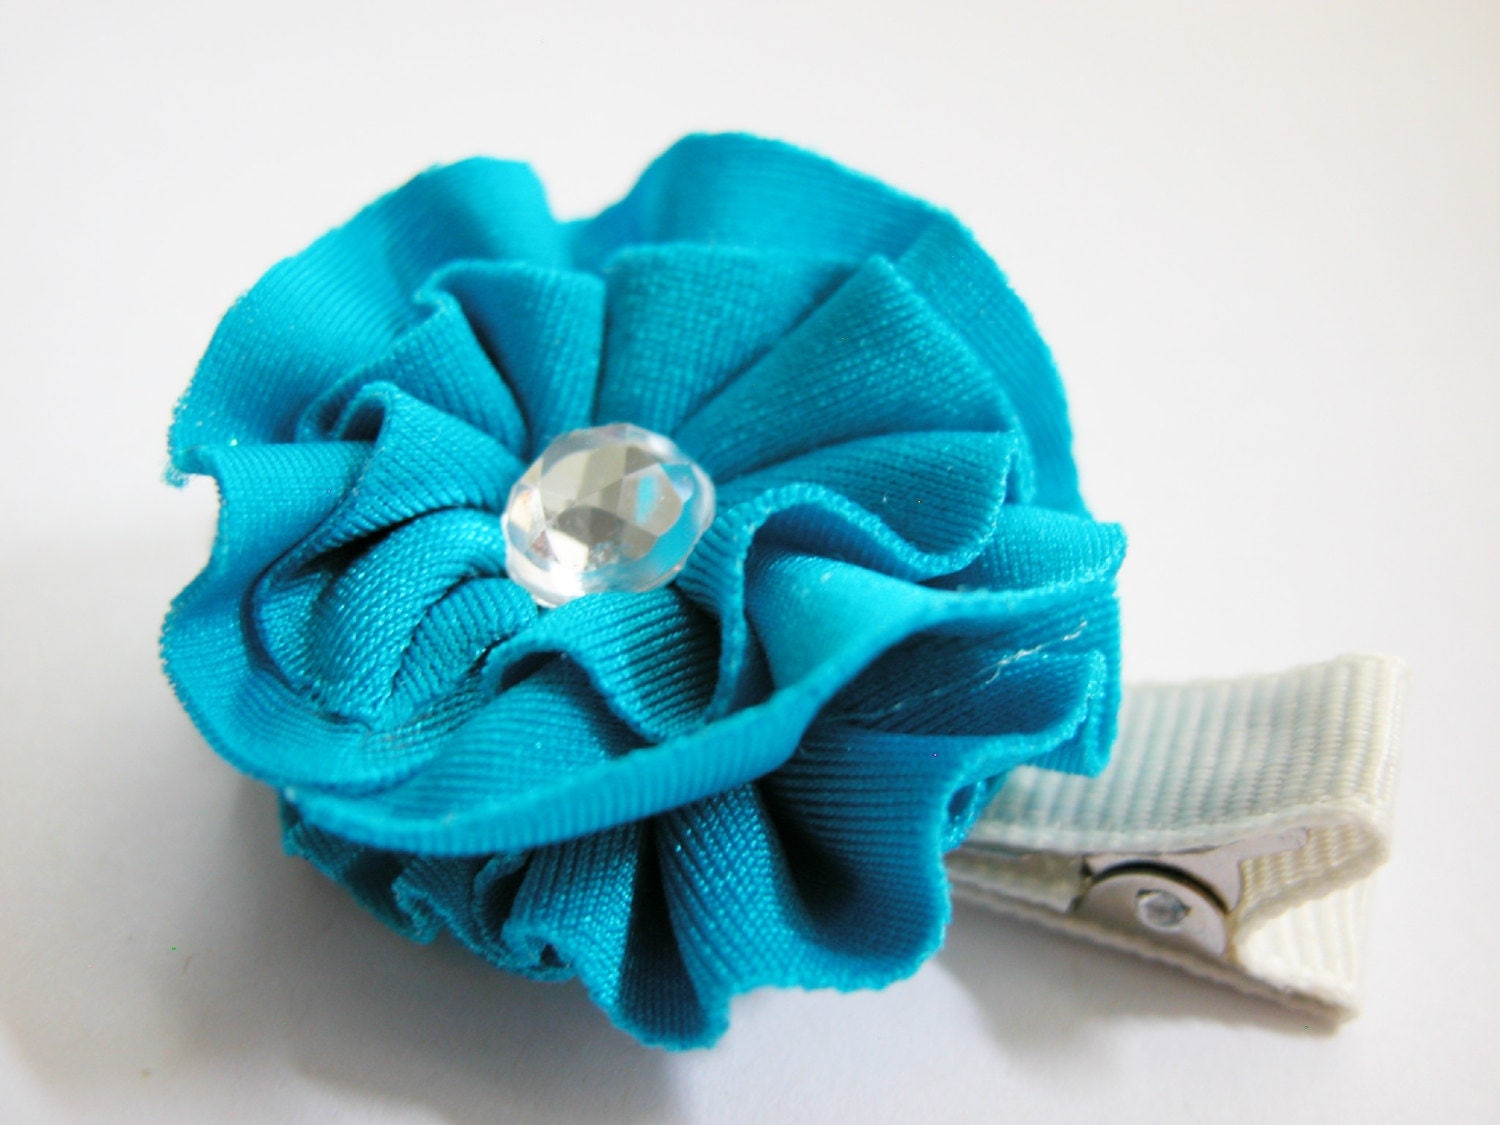 2. Handmade Baby Blue Flower Hair Clip - wide 5